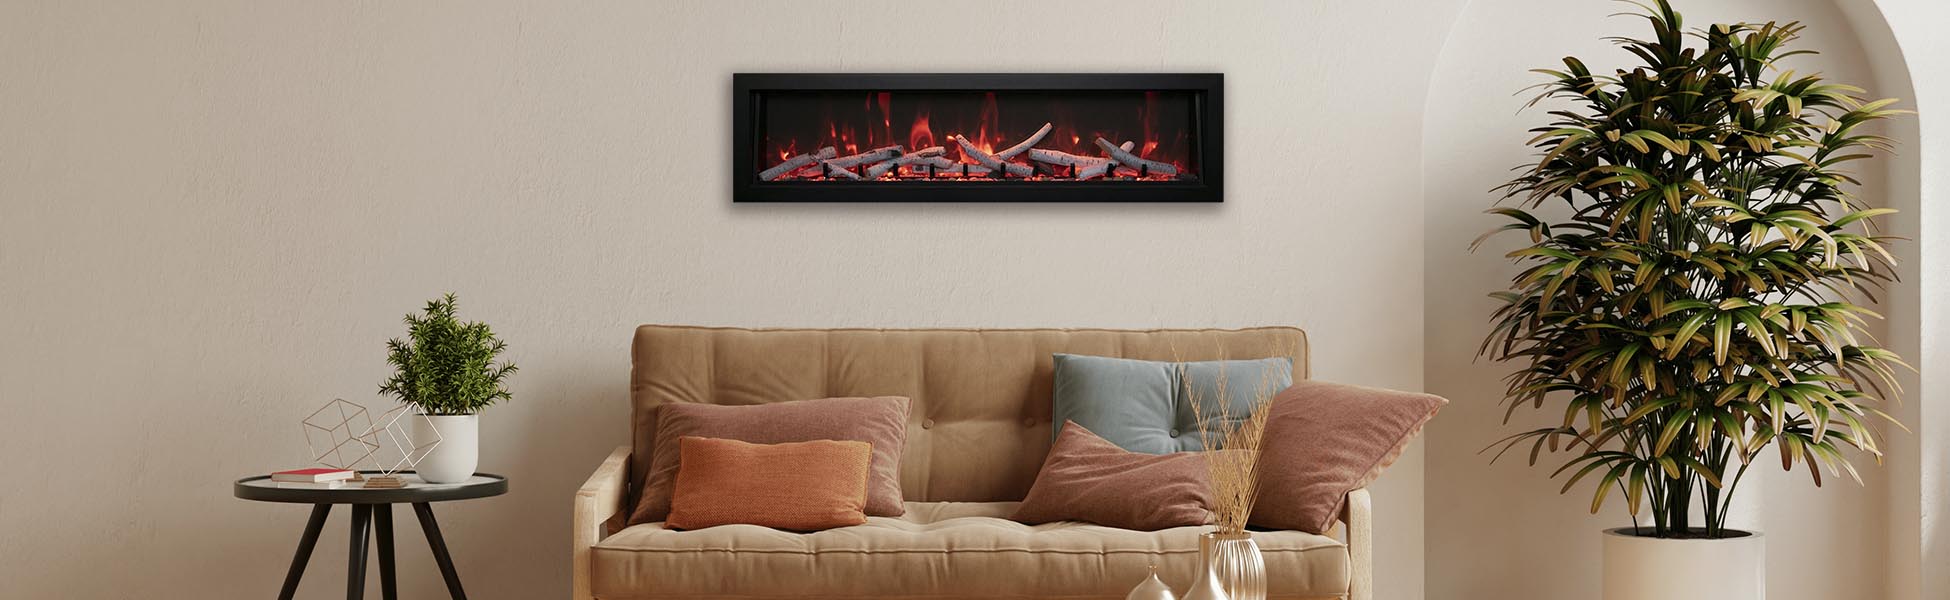 Amantii BI-40-Deep electric fireplace